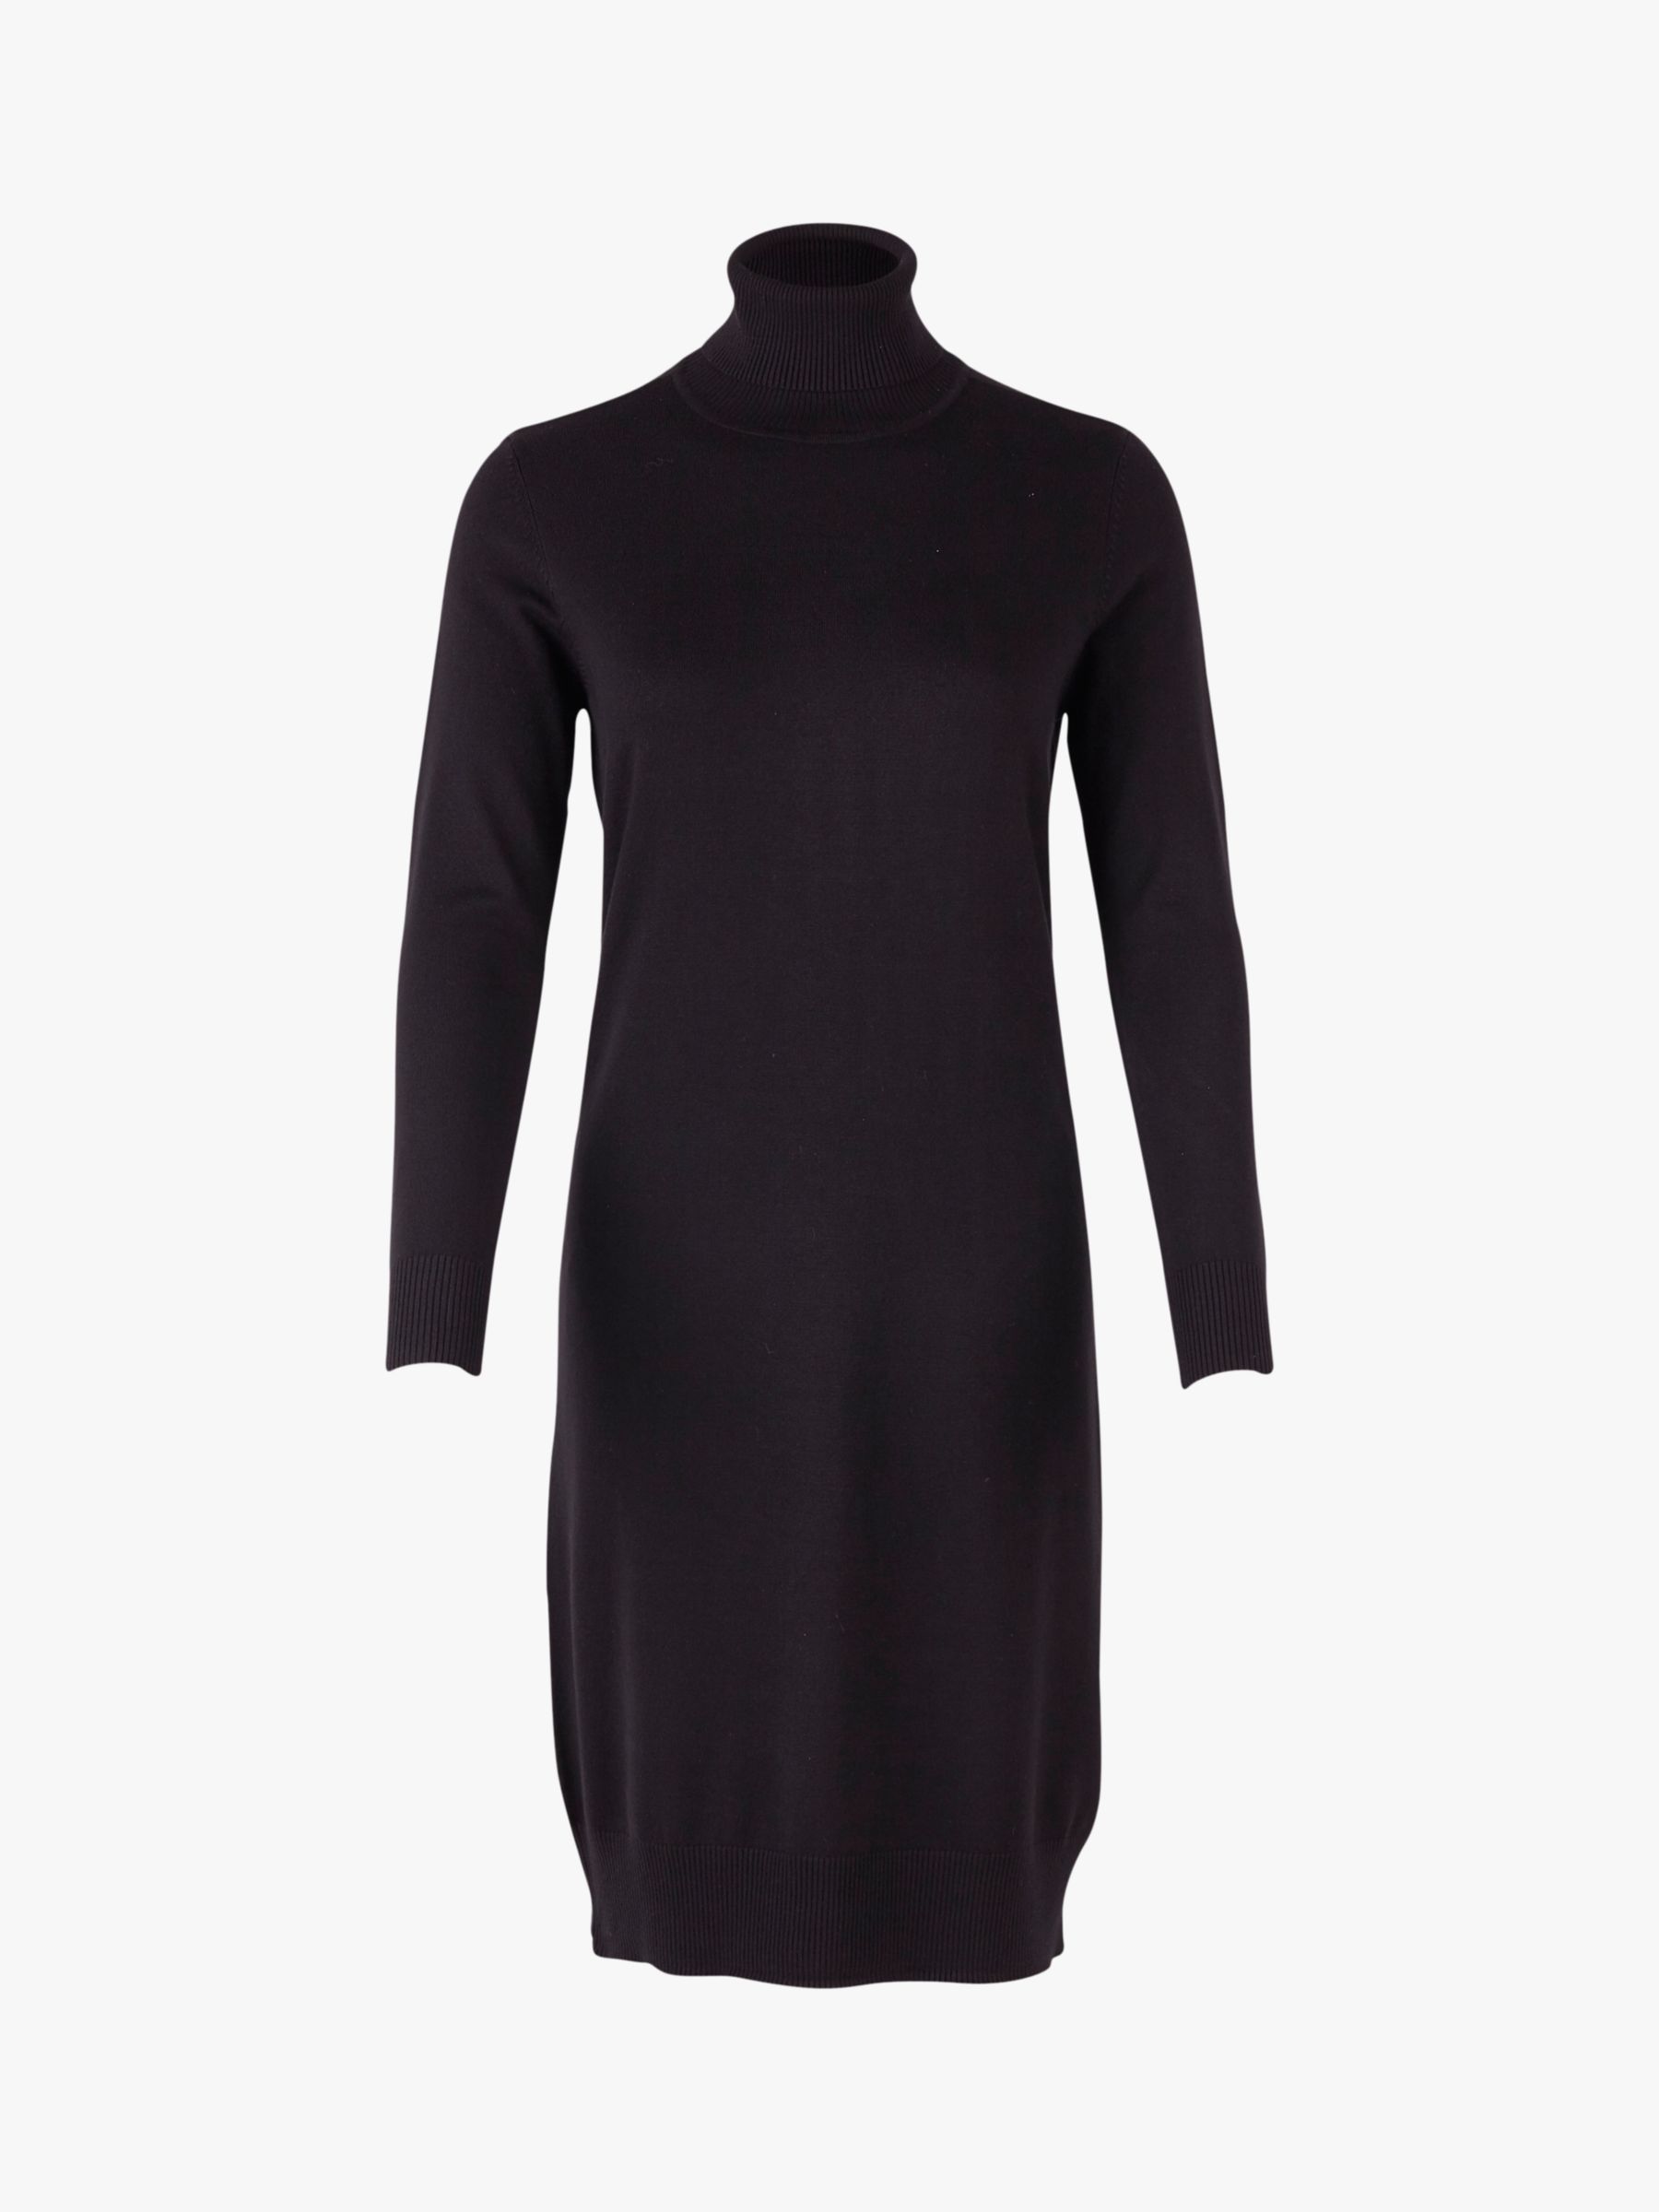 Saint Tropez Mila Roll Neck Dress, Black at John Lewis & Partners